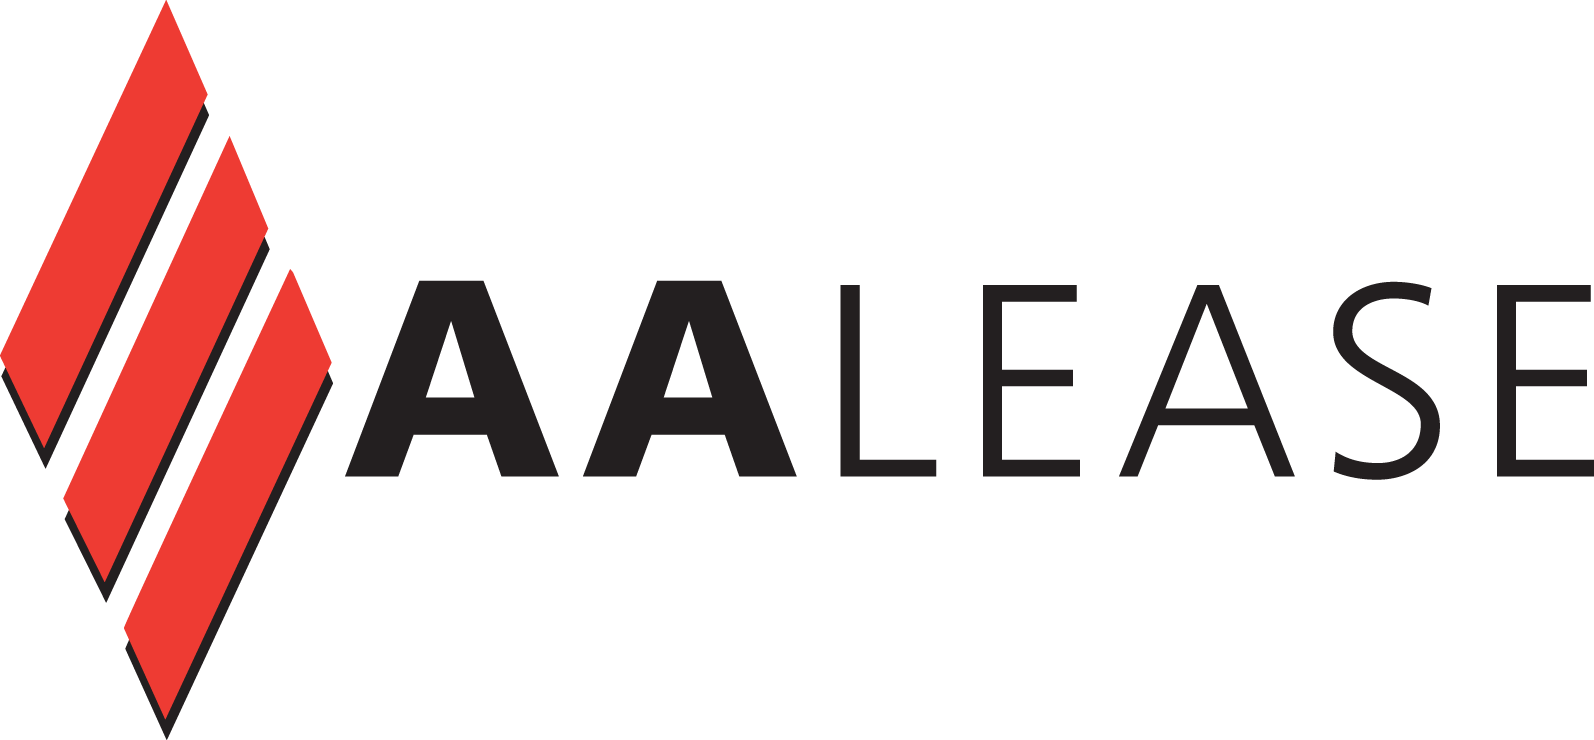 aa lease logo